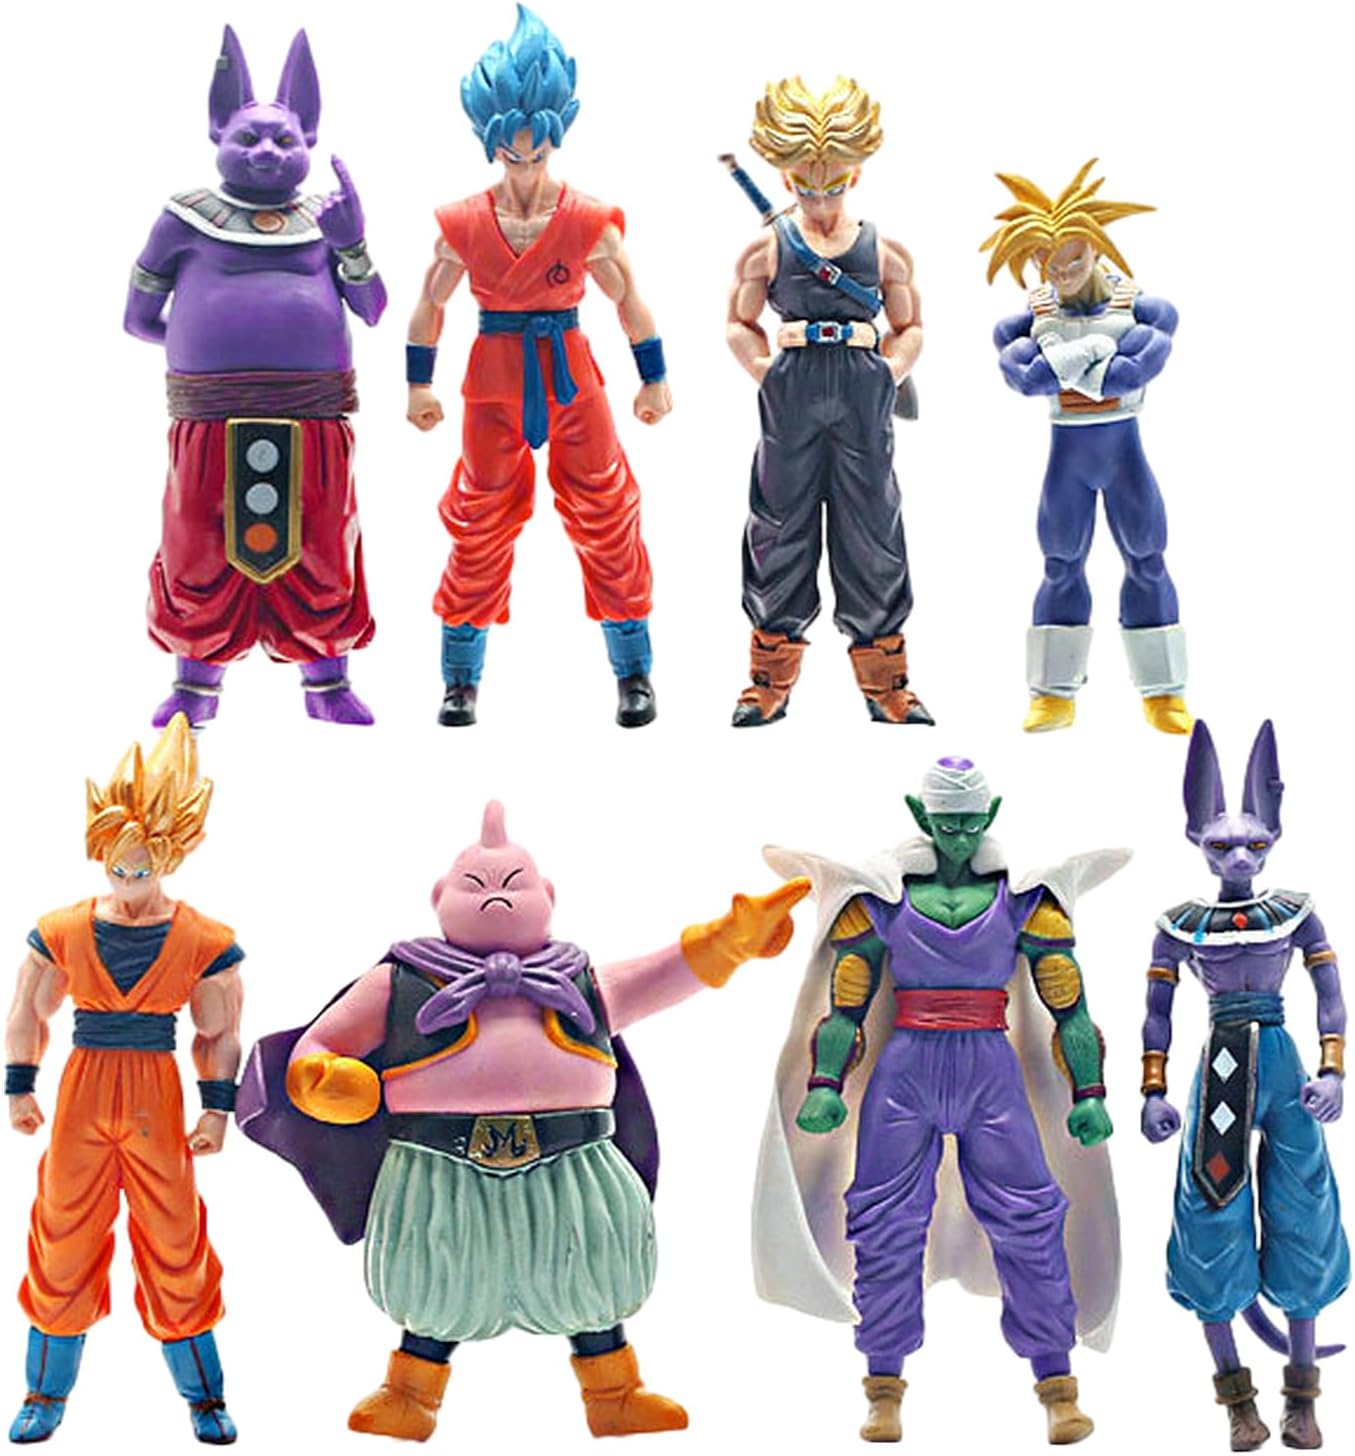 DBZ Goku Action Figures,Set of 8 Super Hero Anime Action Figure Toys 5.7" Cykapu